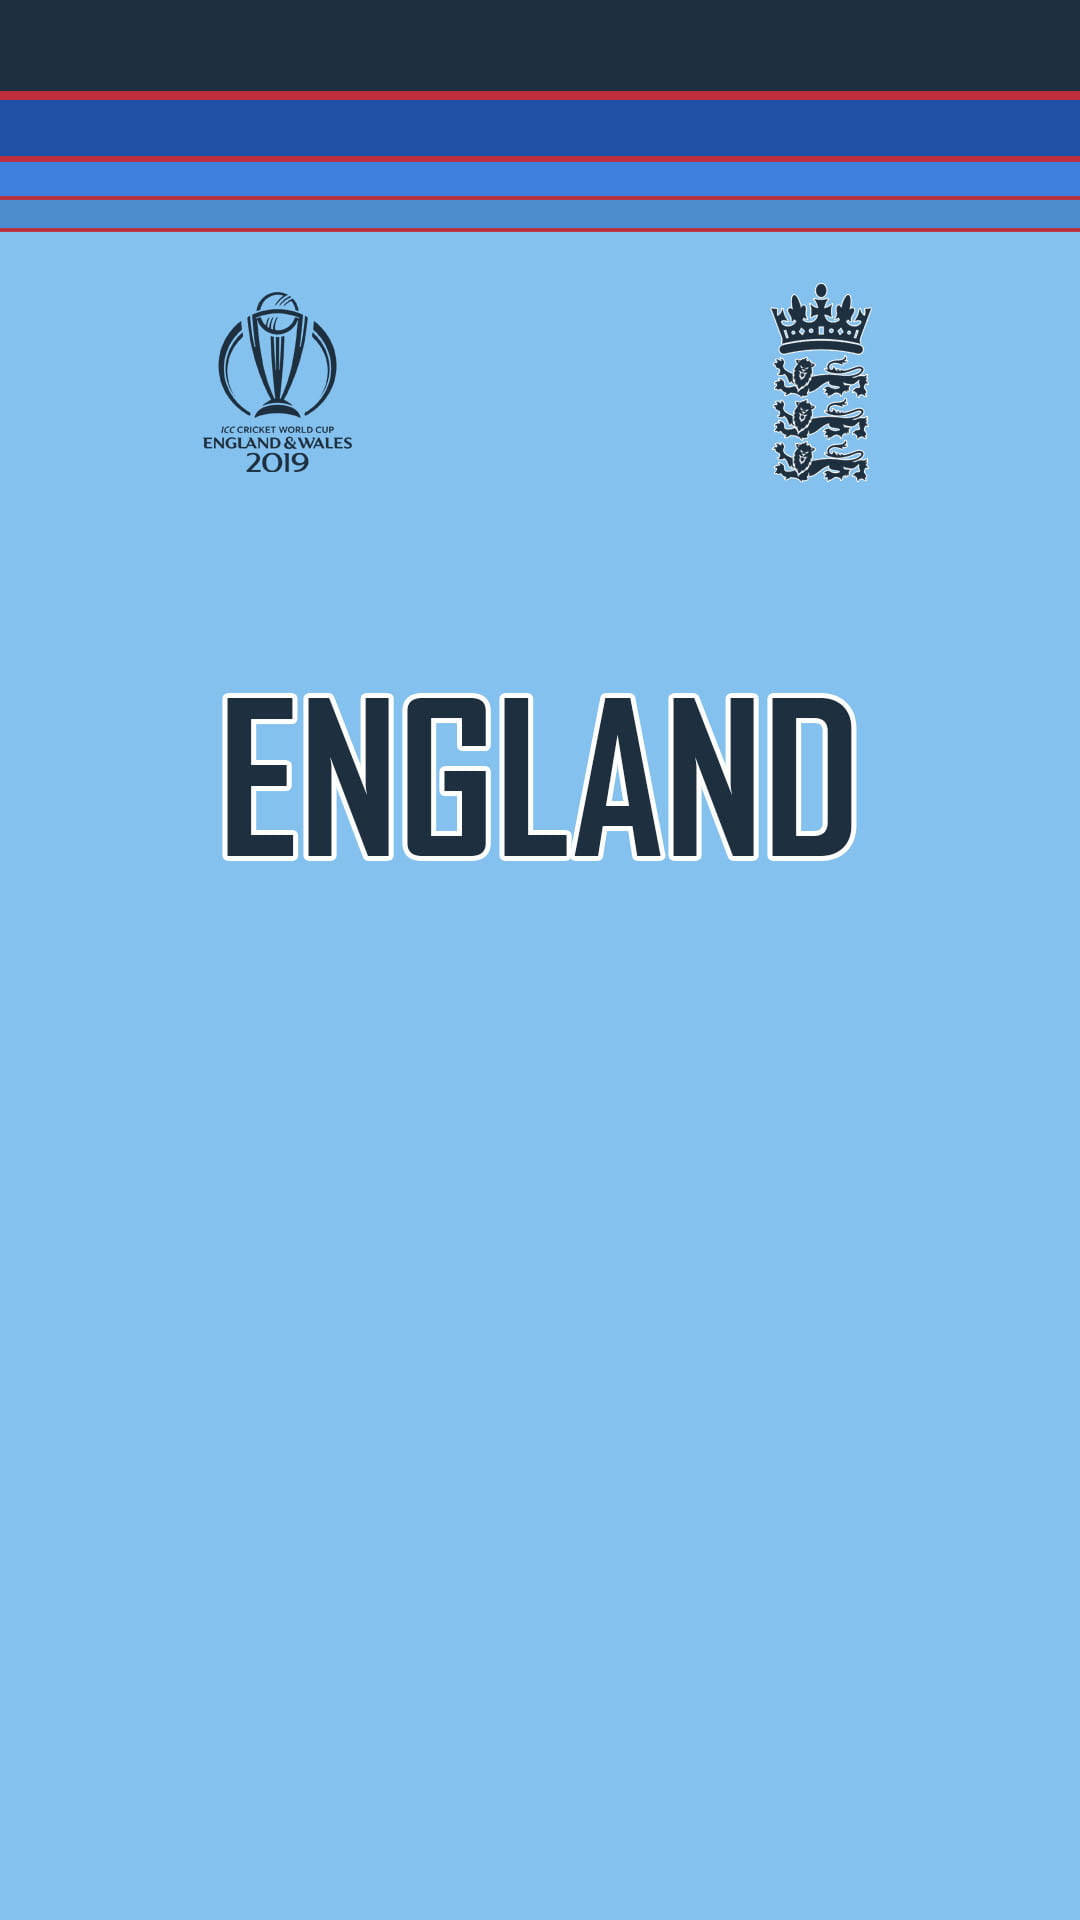 Download England Cricket Team Logos Wallpaper 